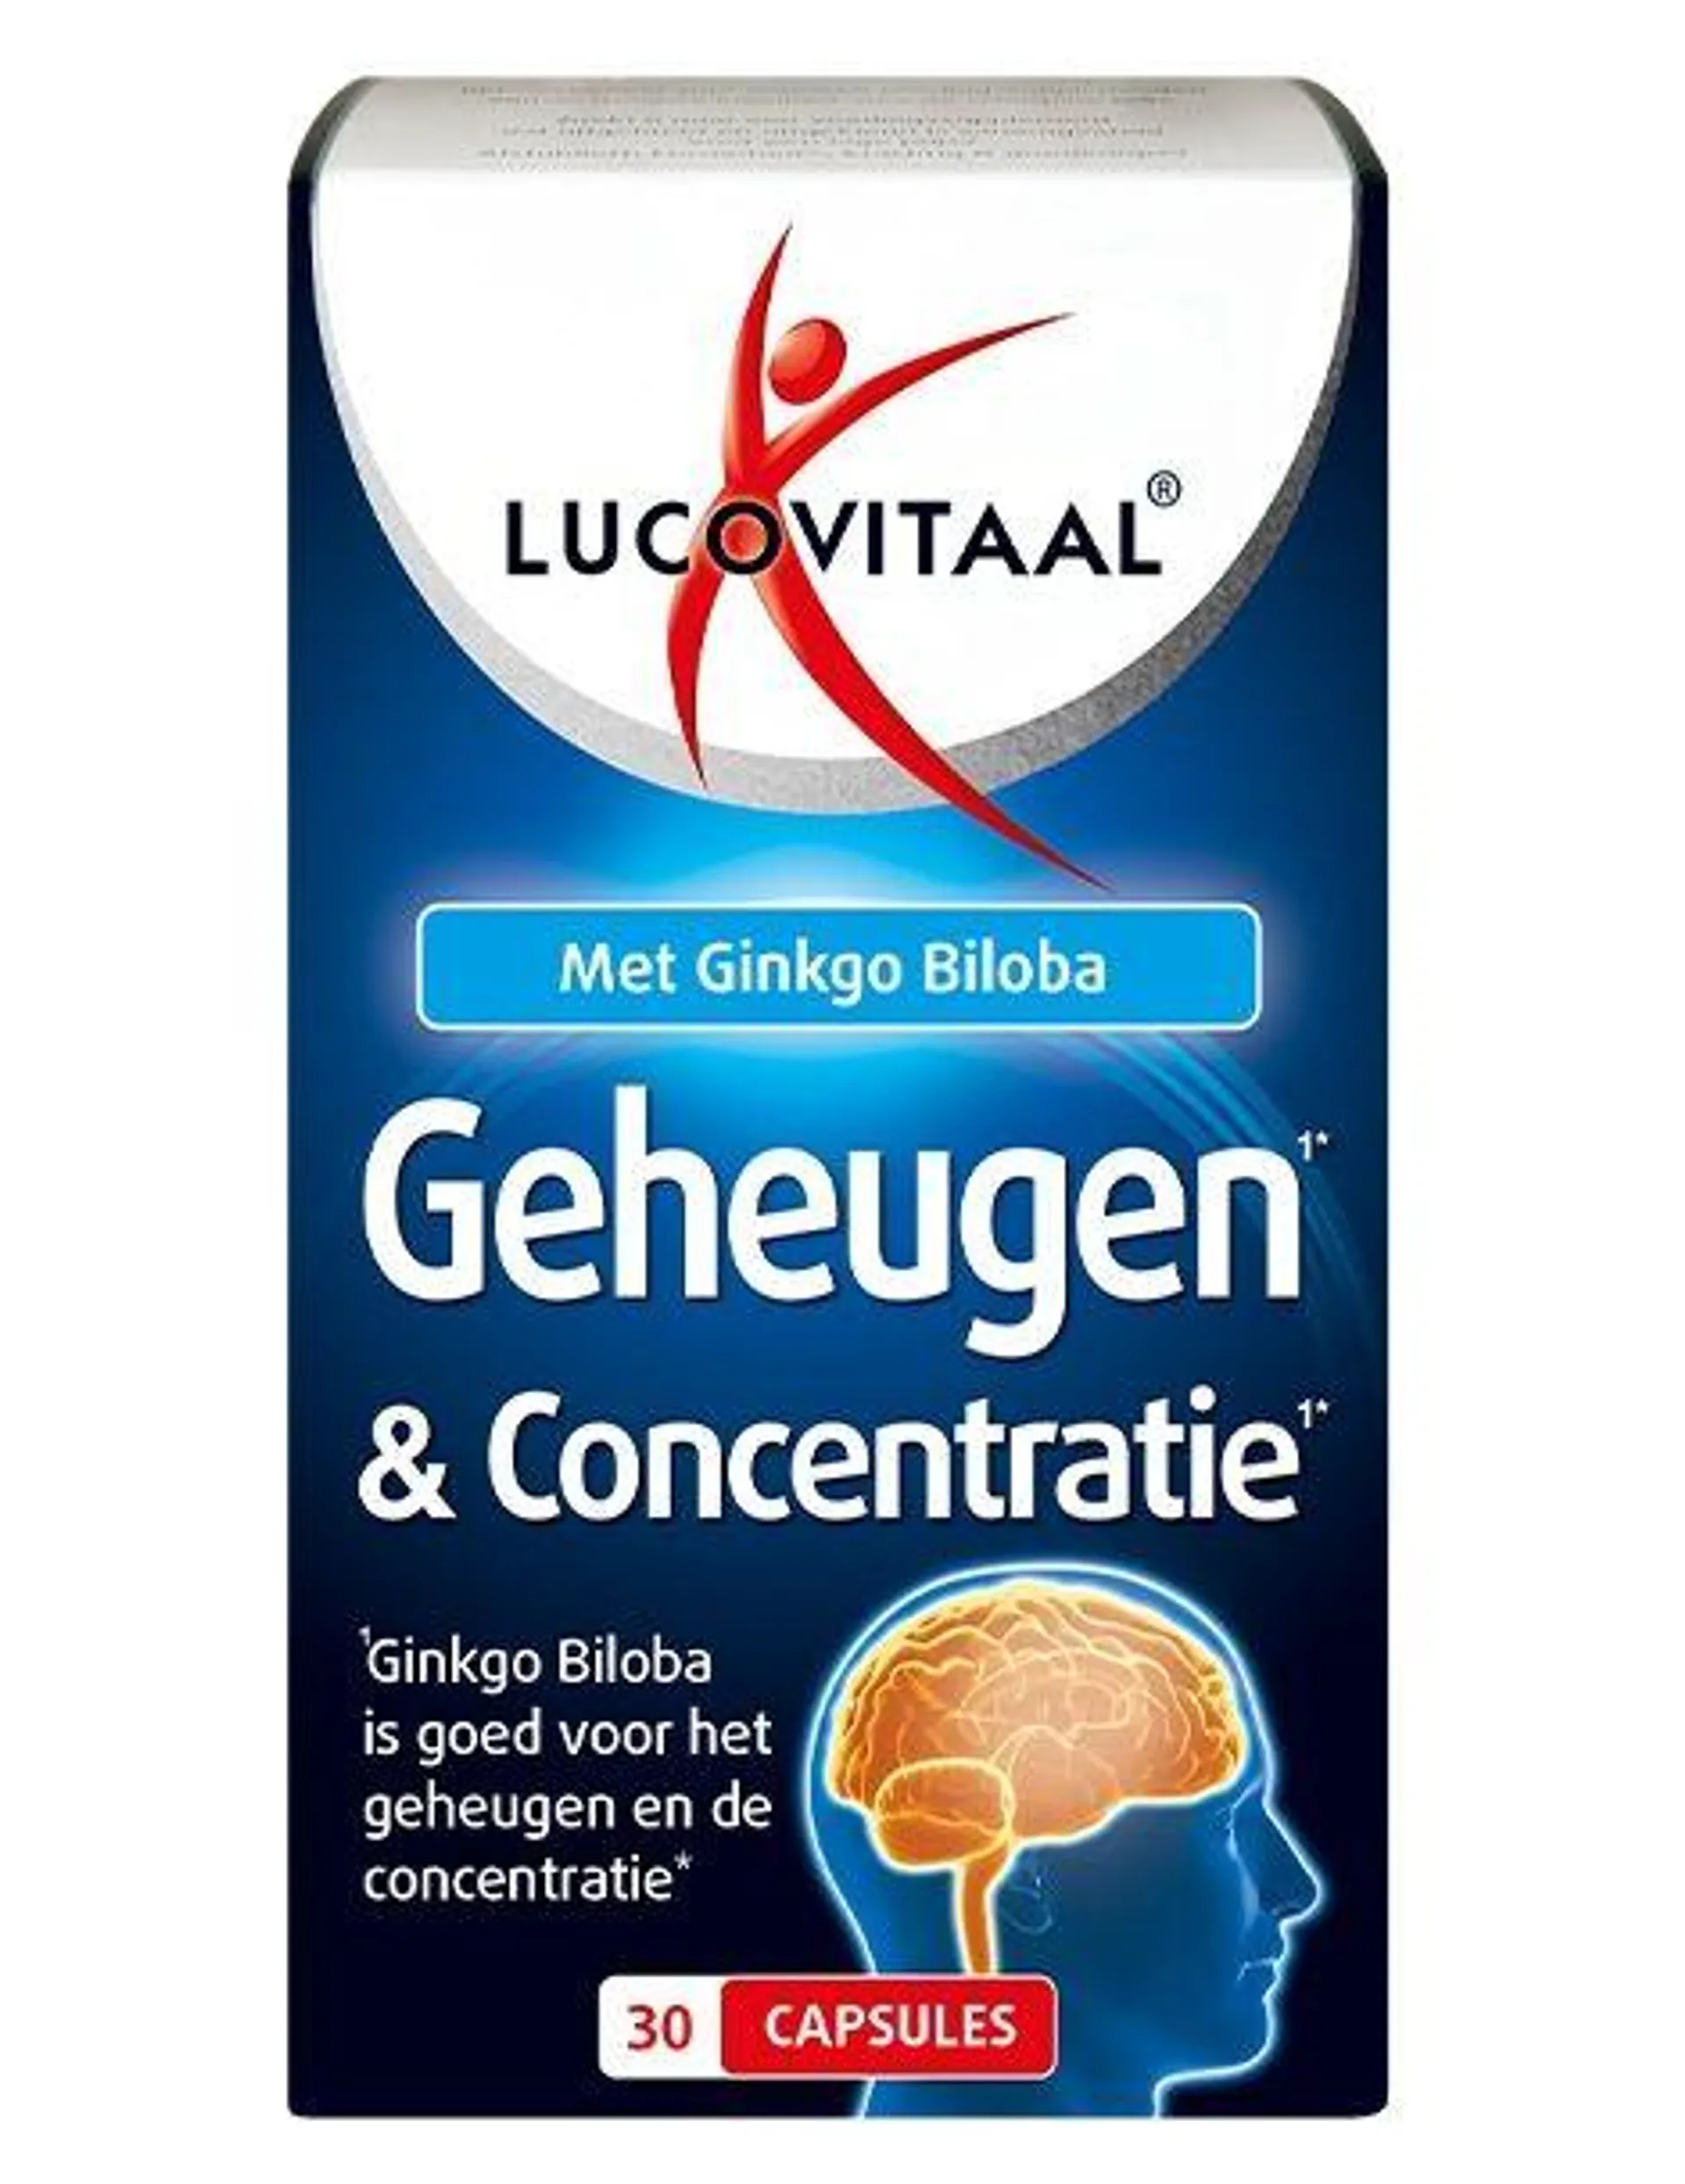 Lucovitaal Geheugen & concentratie 30 capsules